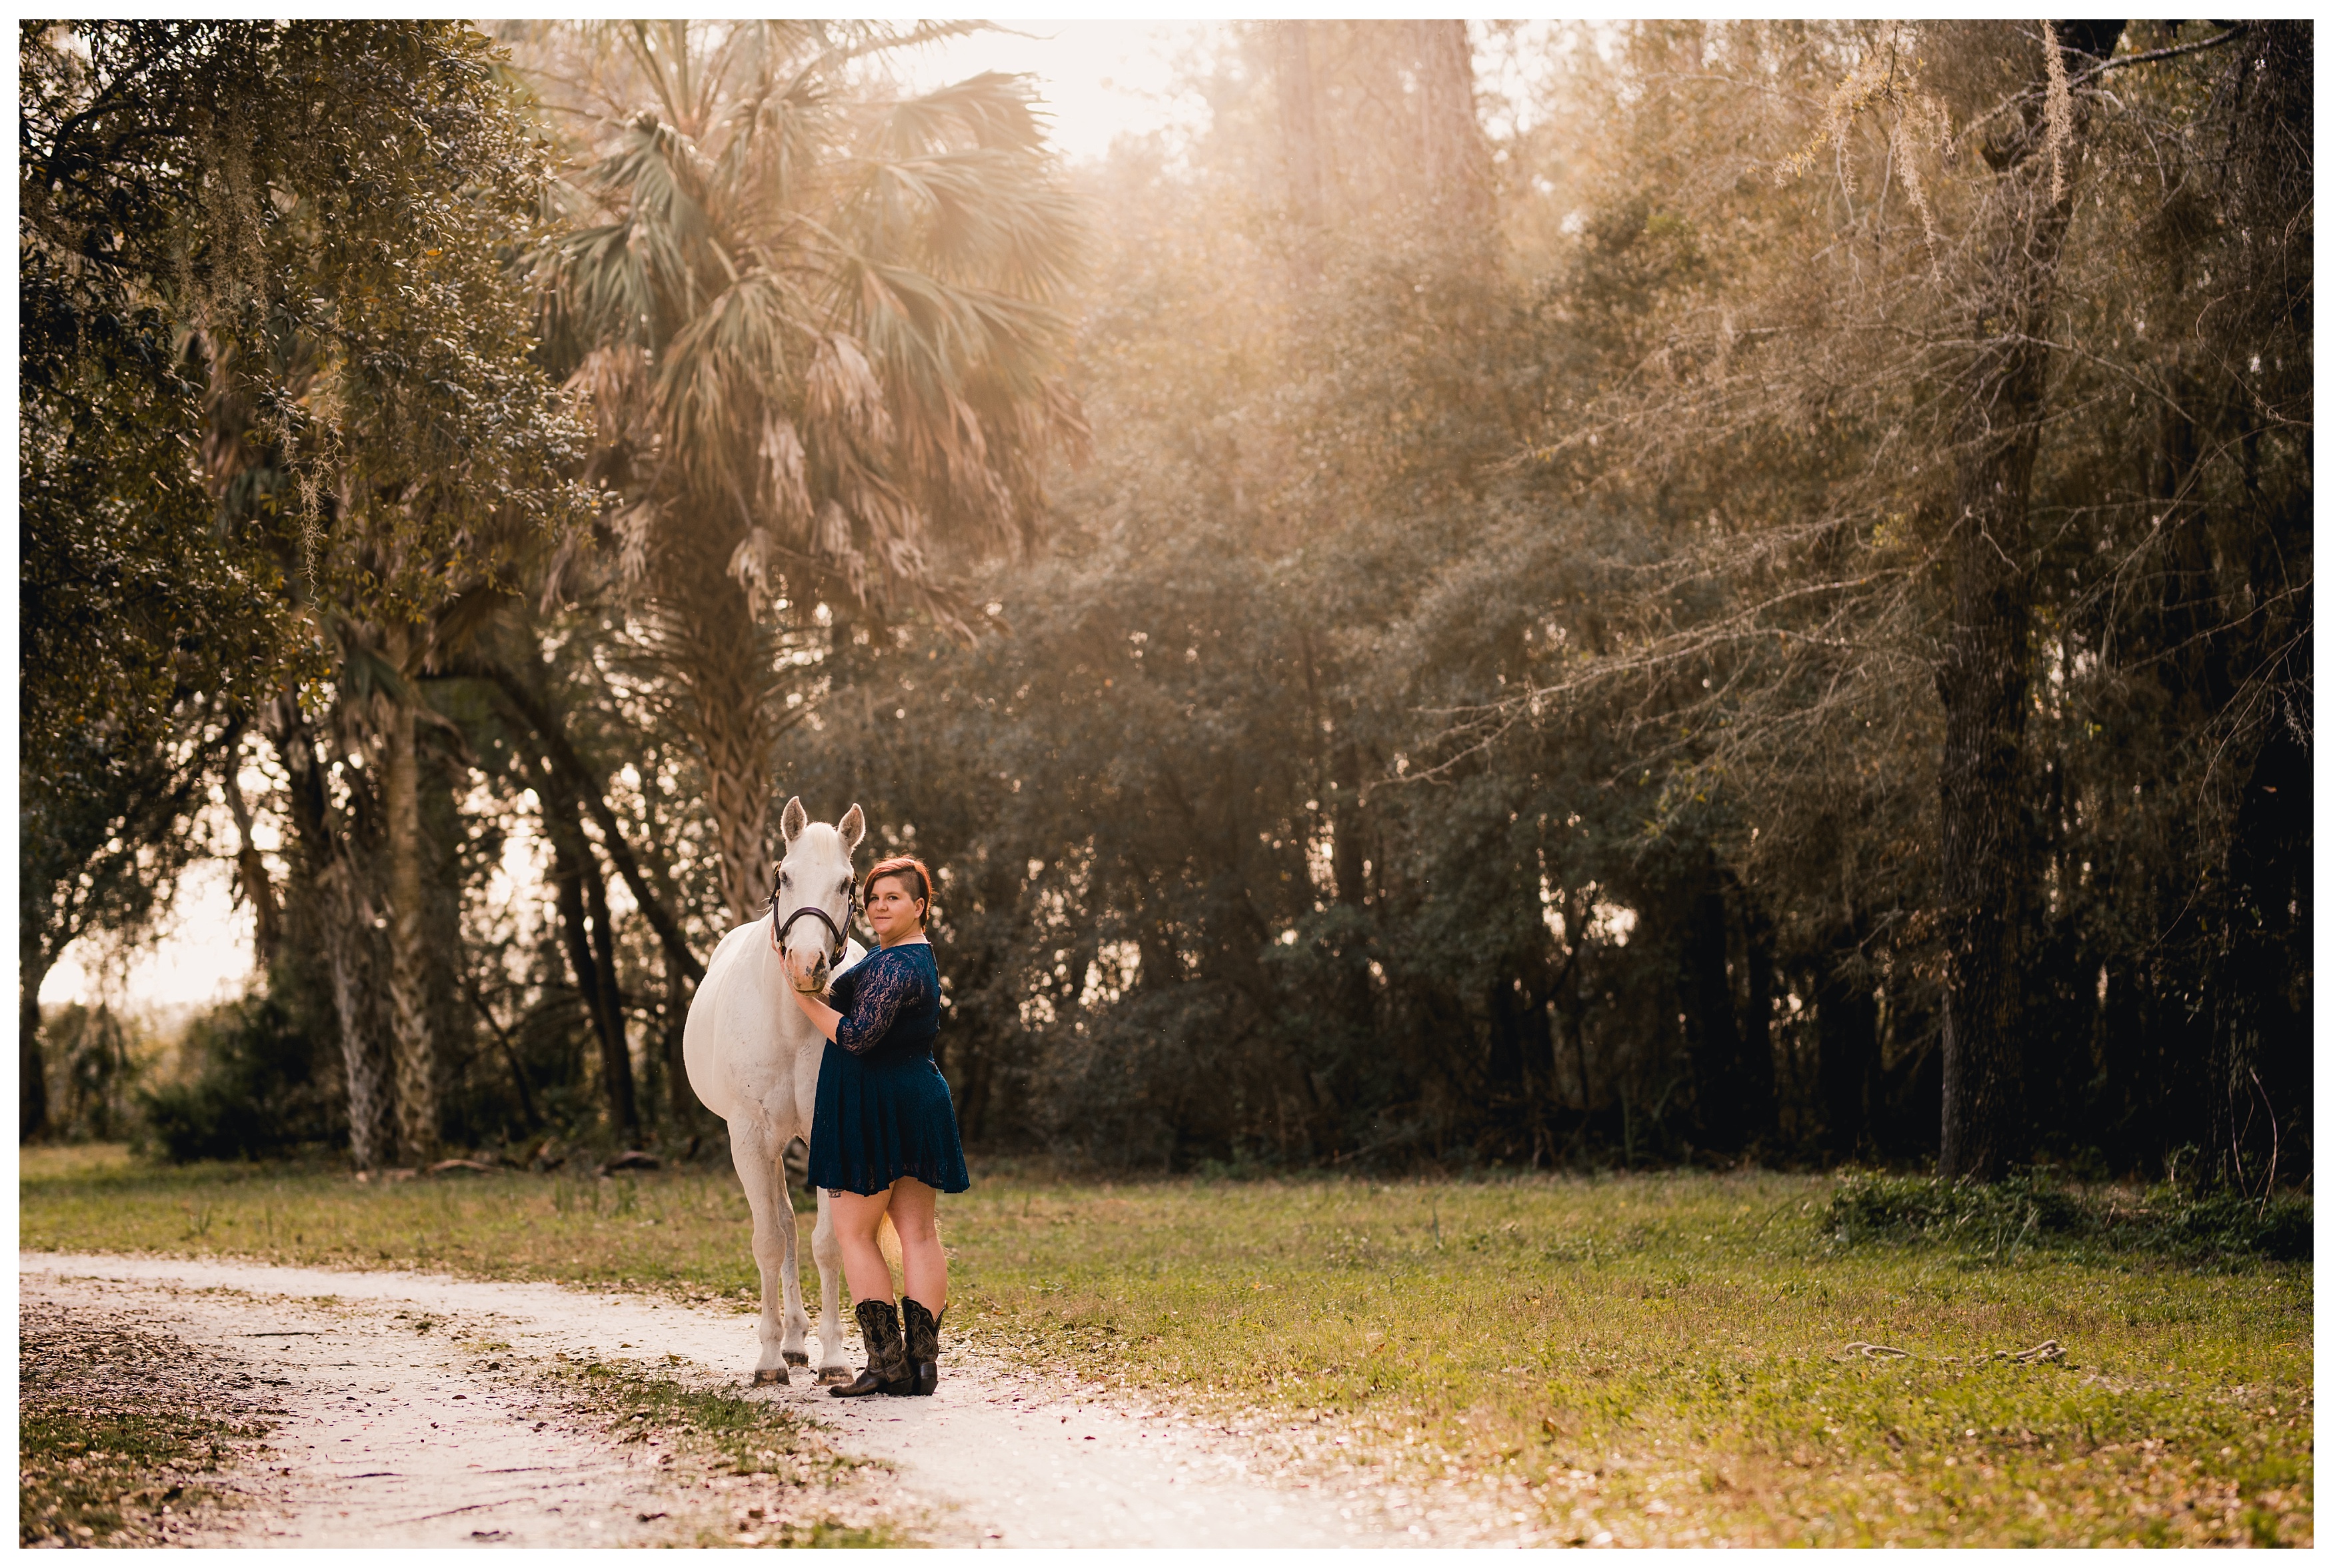 Horse and rider professional portraits taken near Ocala, Florida. Shelly Williams Photography